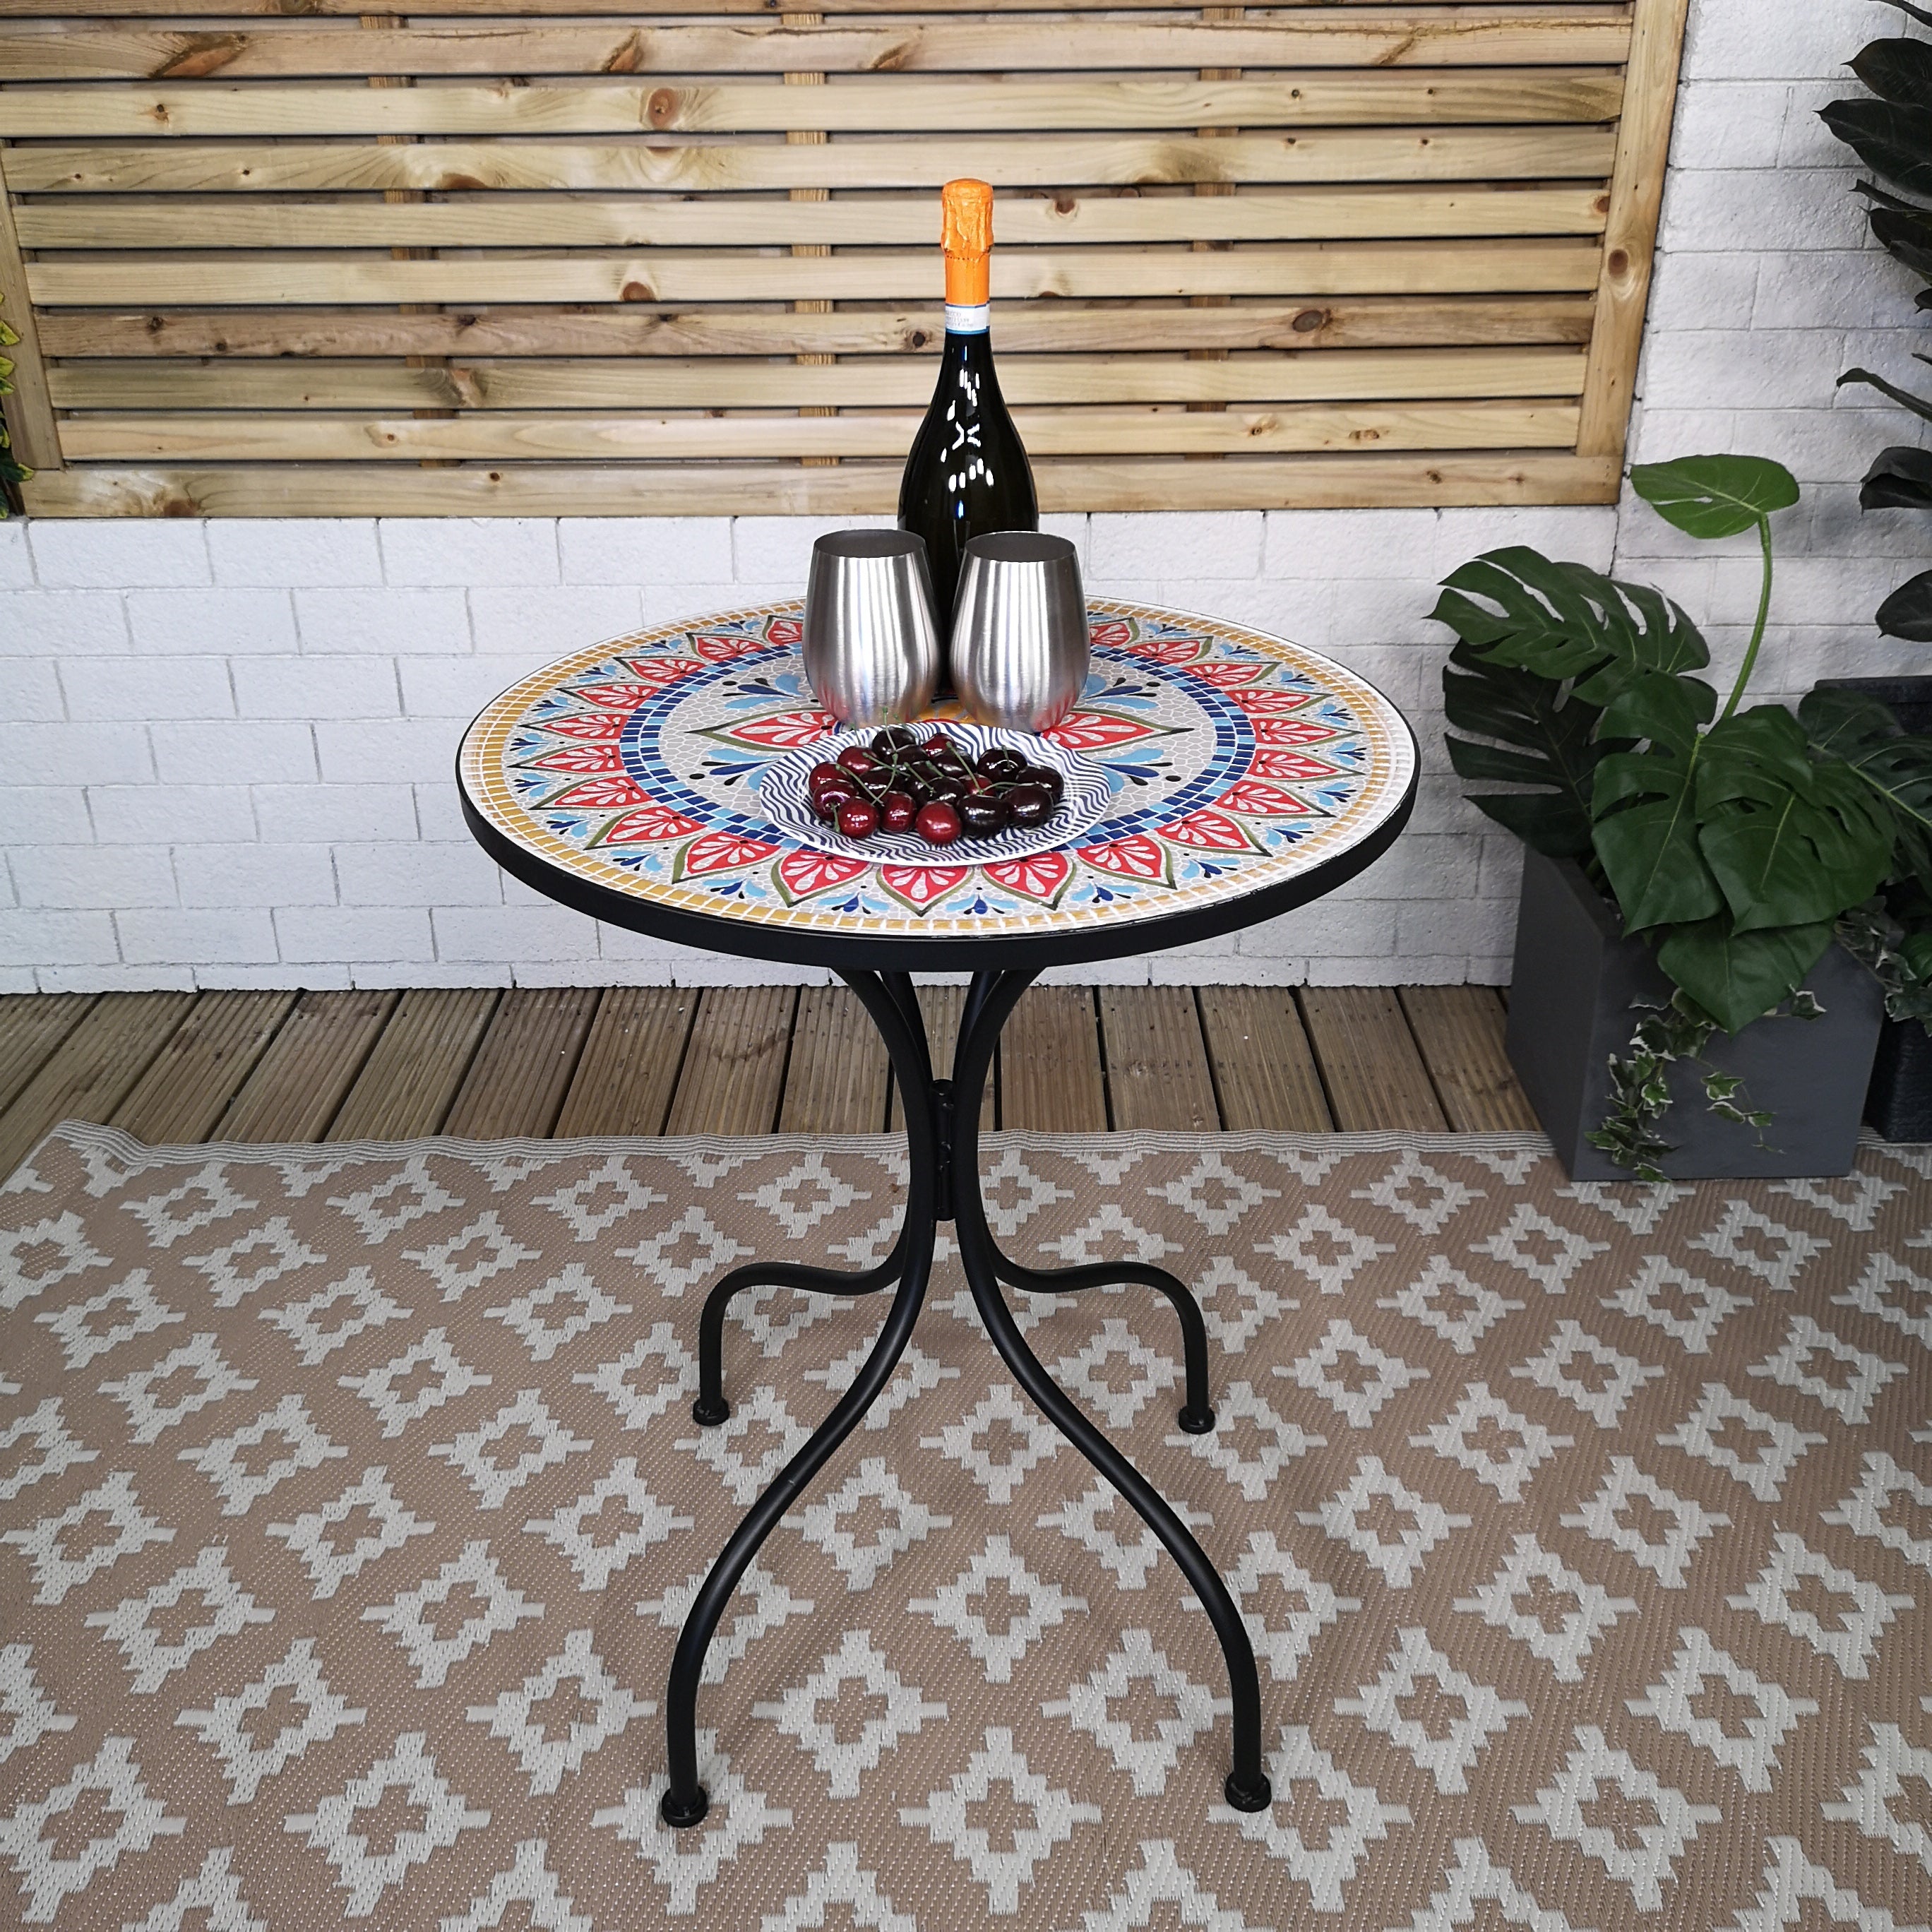 60cm Outdoor Bistro Table Ceramic Design for Garden Patio Balcony